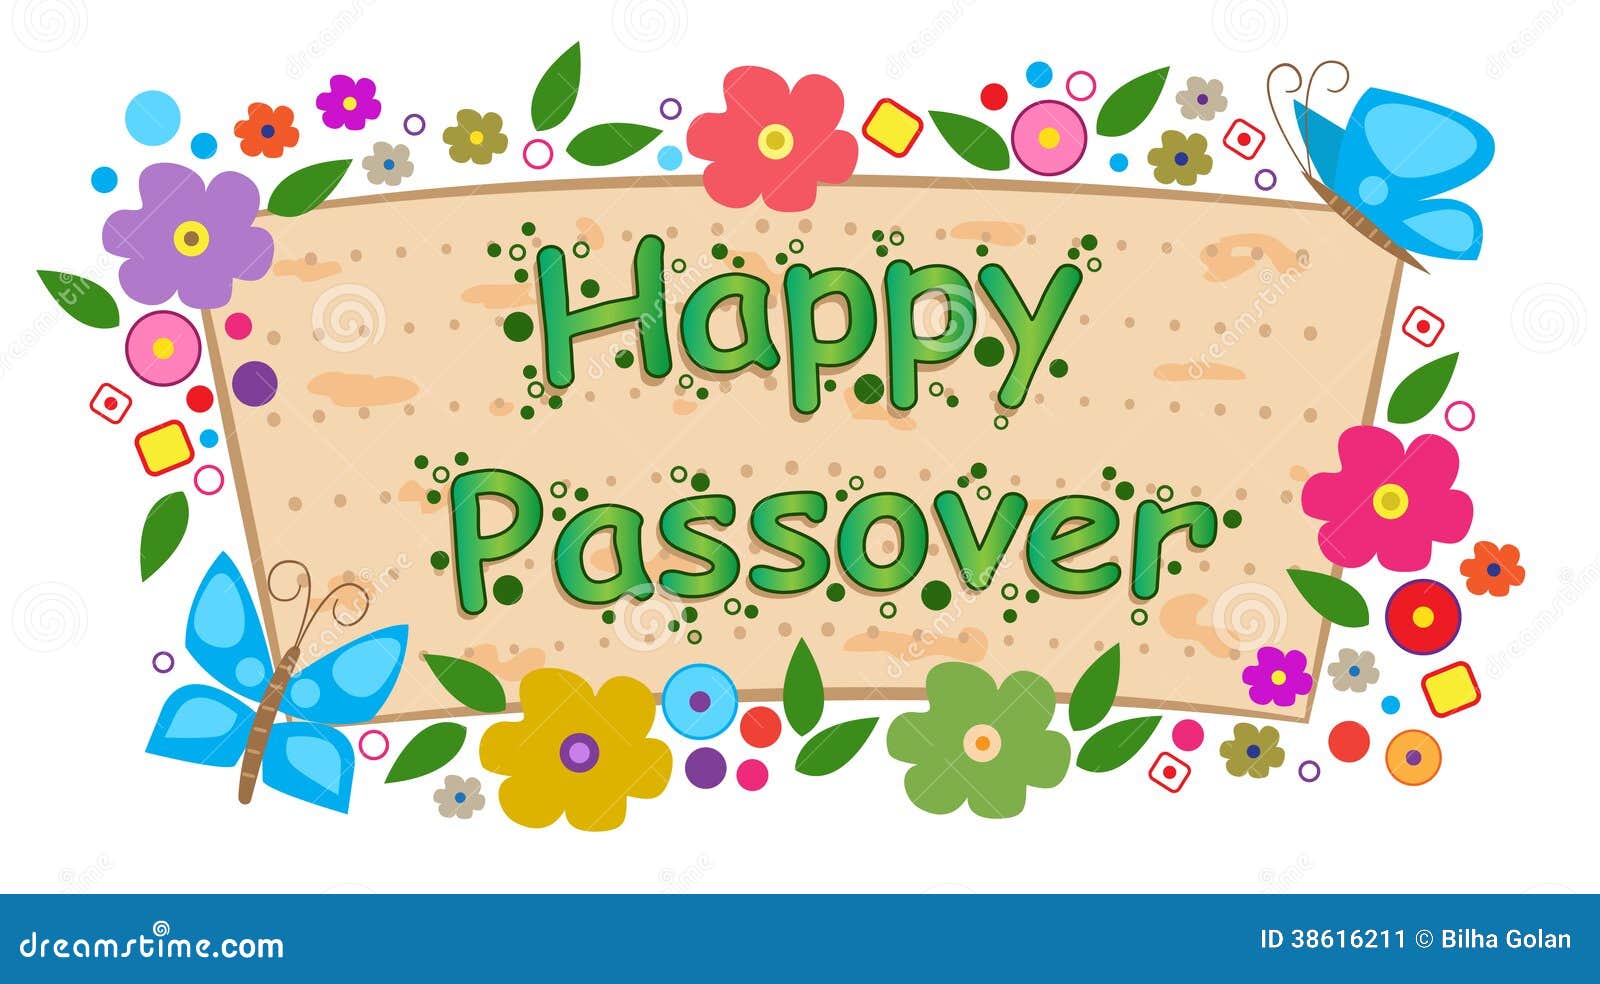 free clipart happy passover - photo #1